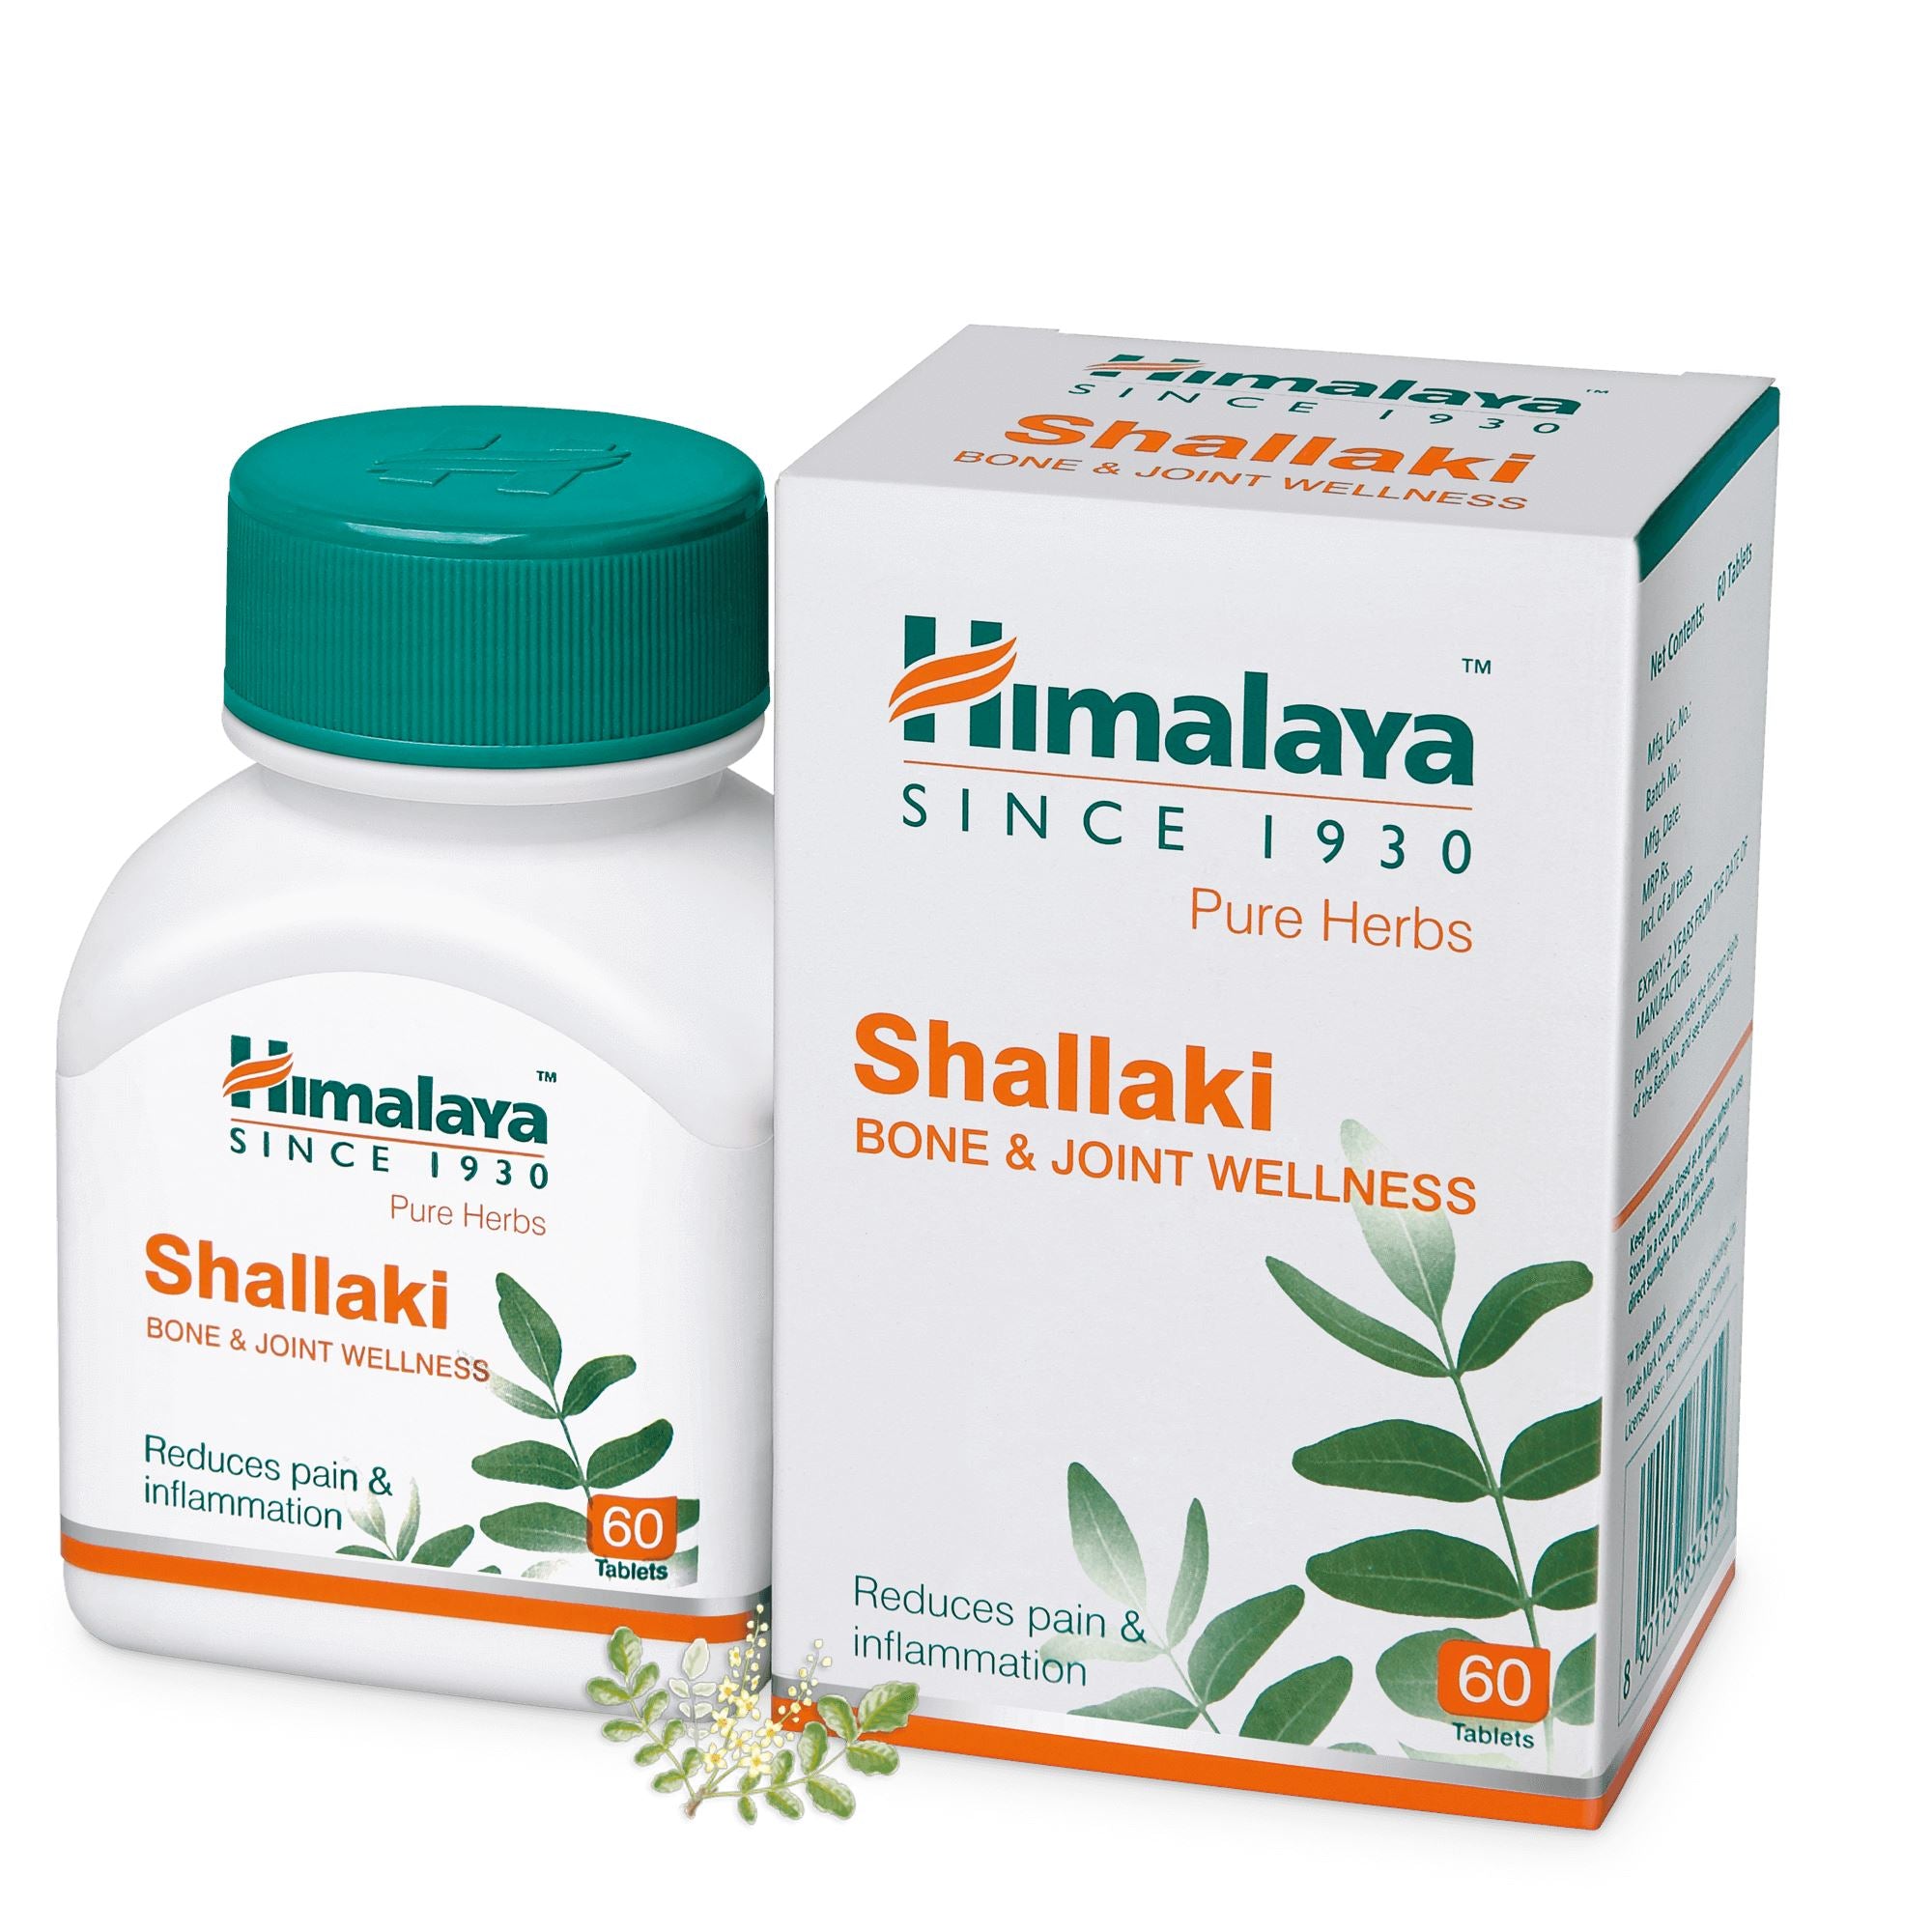 Himalaya Shallaki - Reduces pain and inflammation